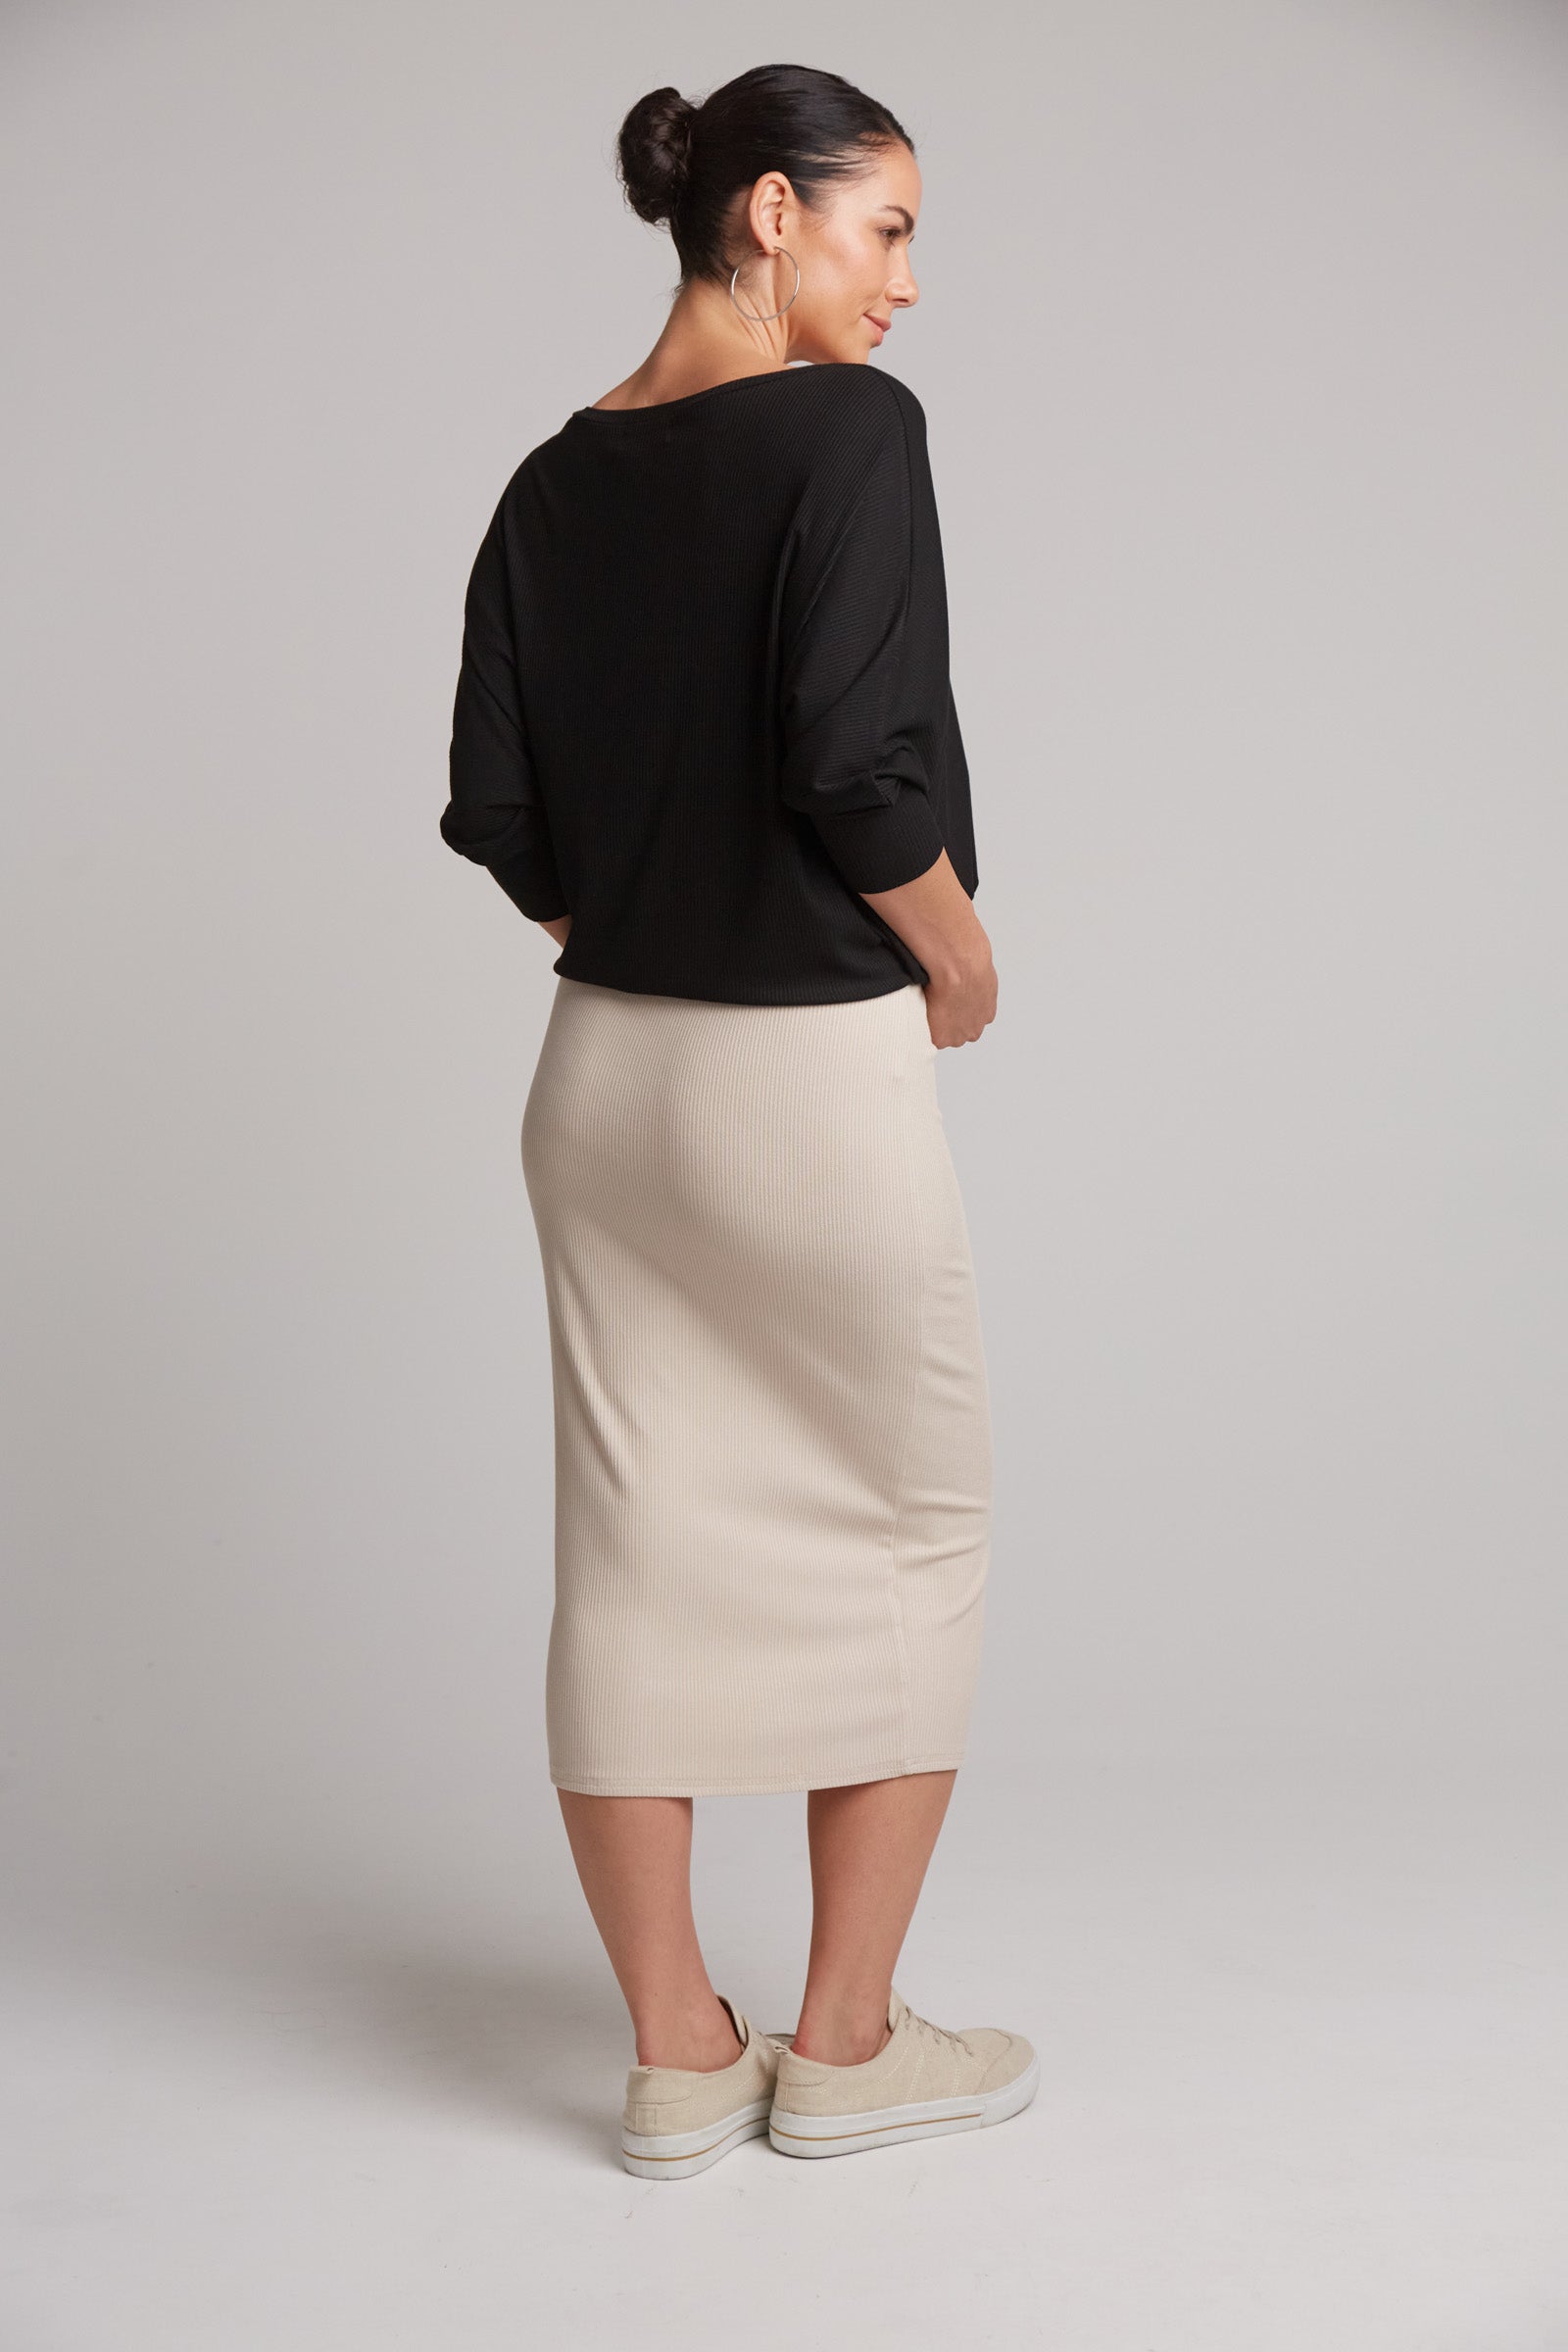 Studio Jersey Skirt - Tusk - eb&ive Clothing - Skirt Mid